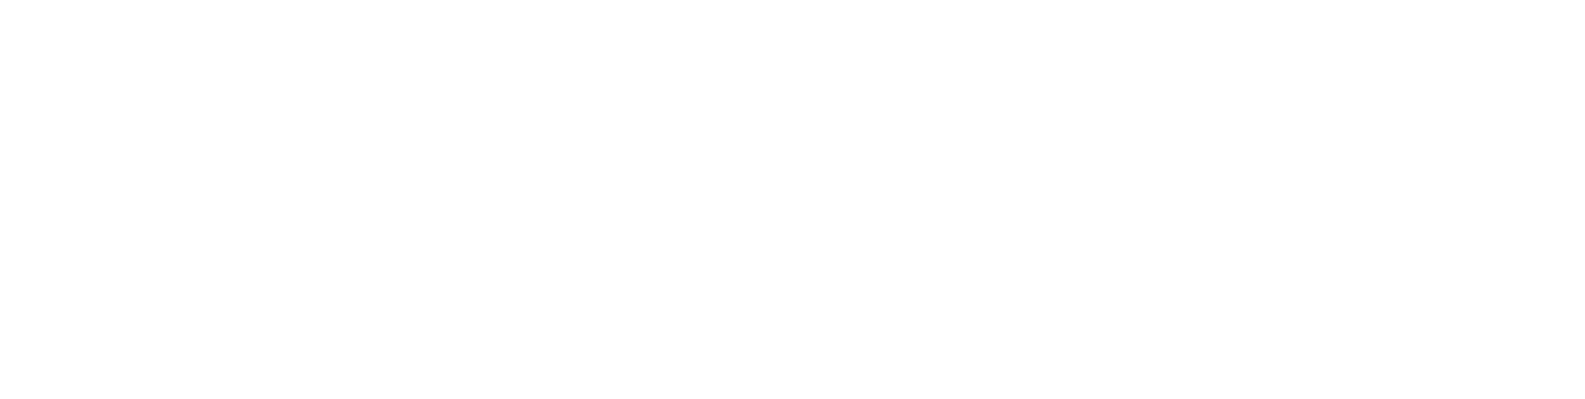 Bank of Jiangsu logo large for dark backgrounds (transparent PNG)